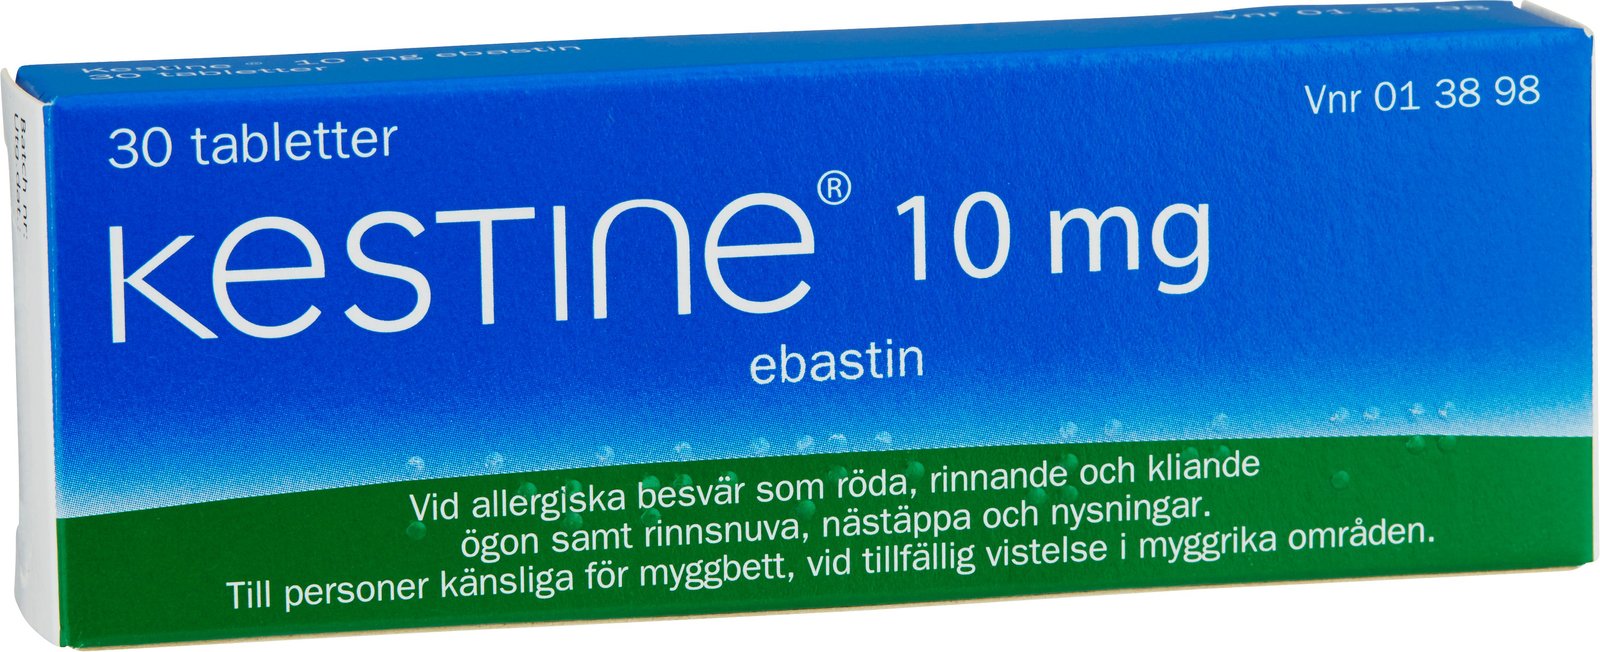 Kestine 10 mg ebastin 30 tabletter